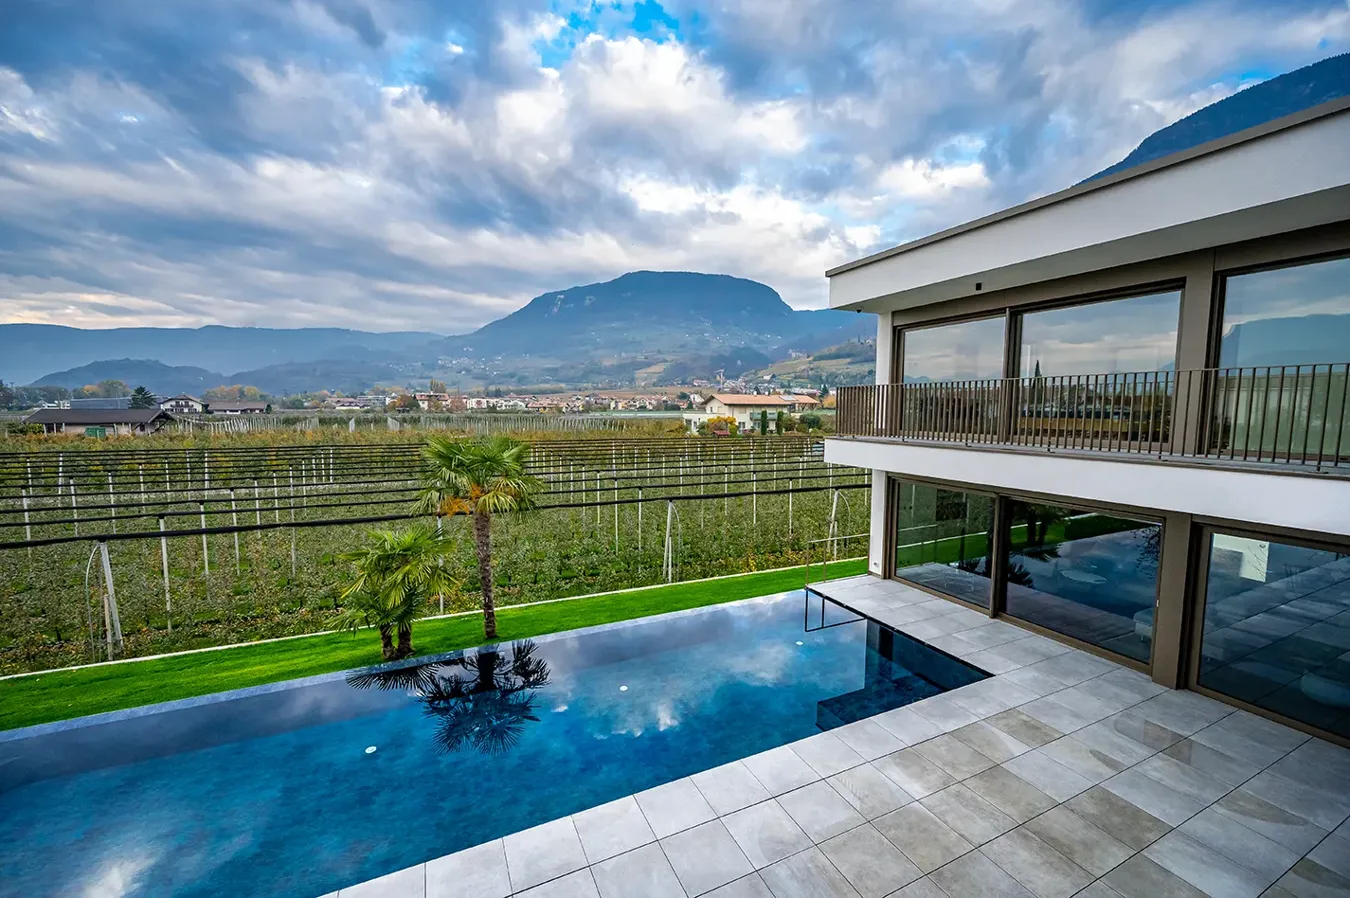 Pool with Moov Grey anti-slip tile edging overlooking mountainous landscape.